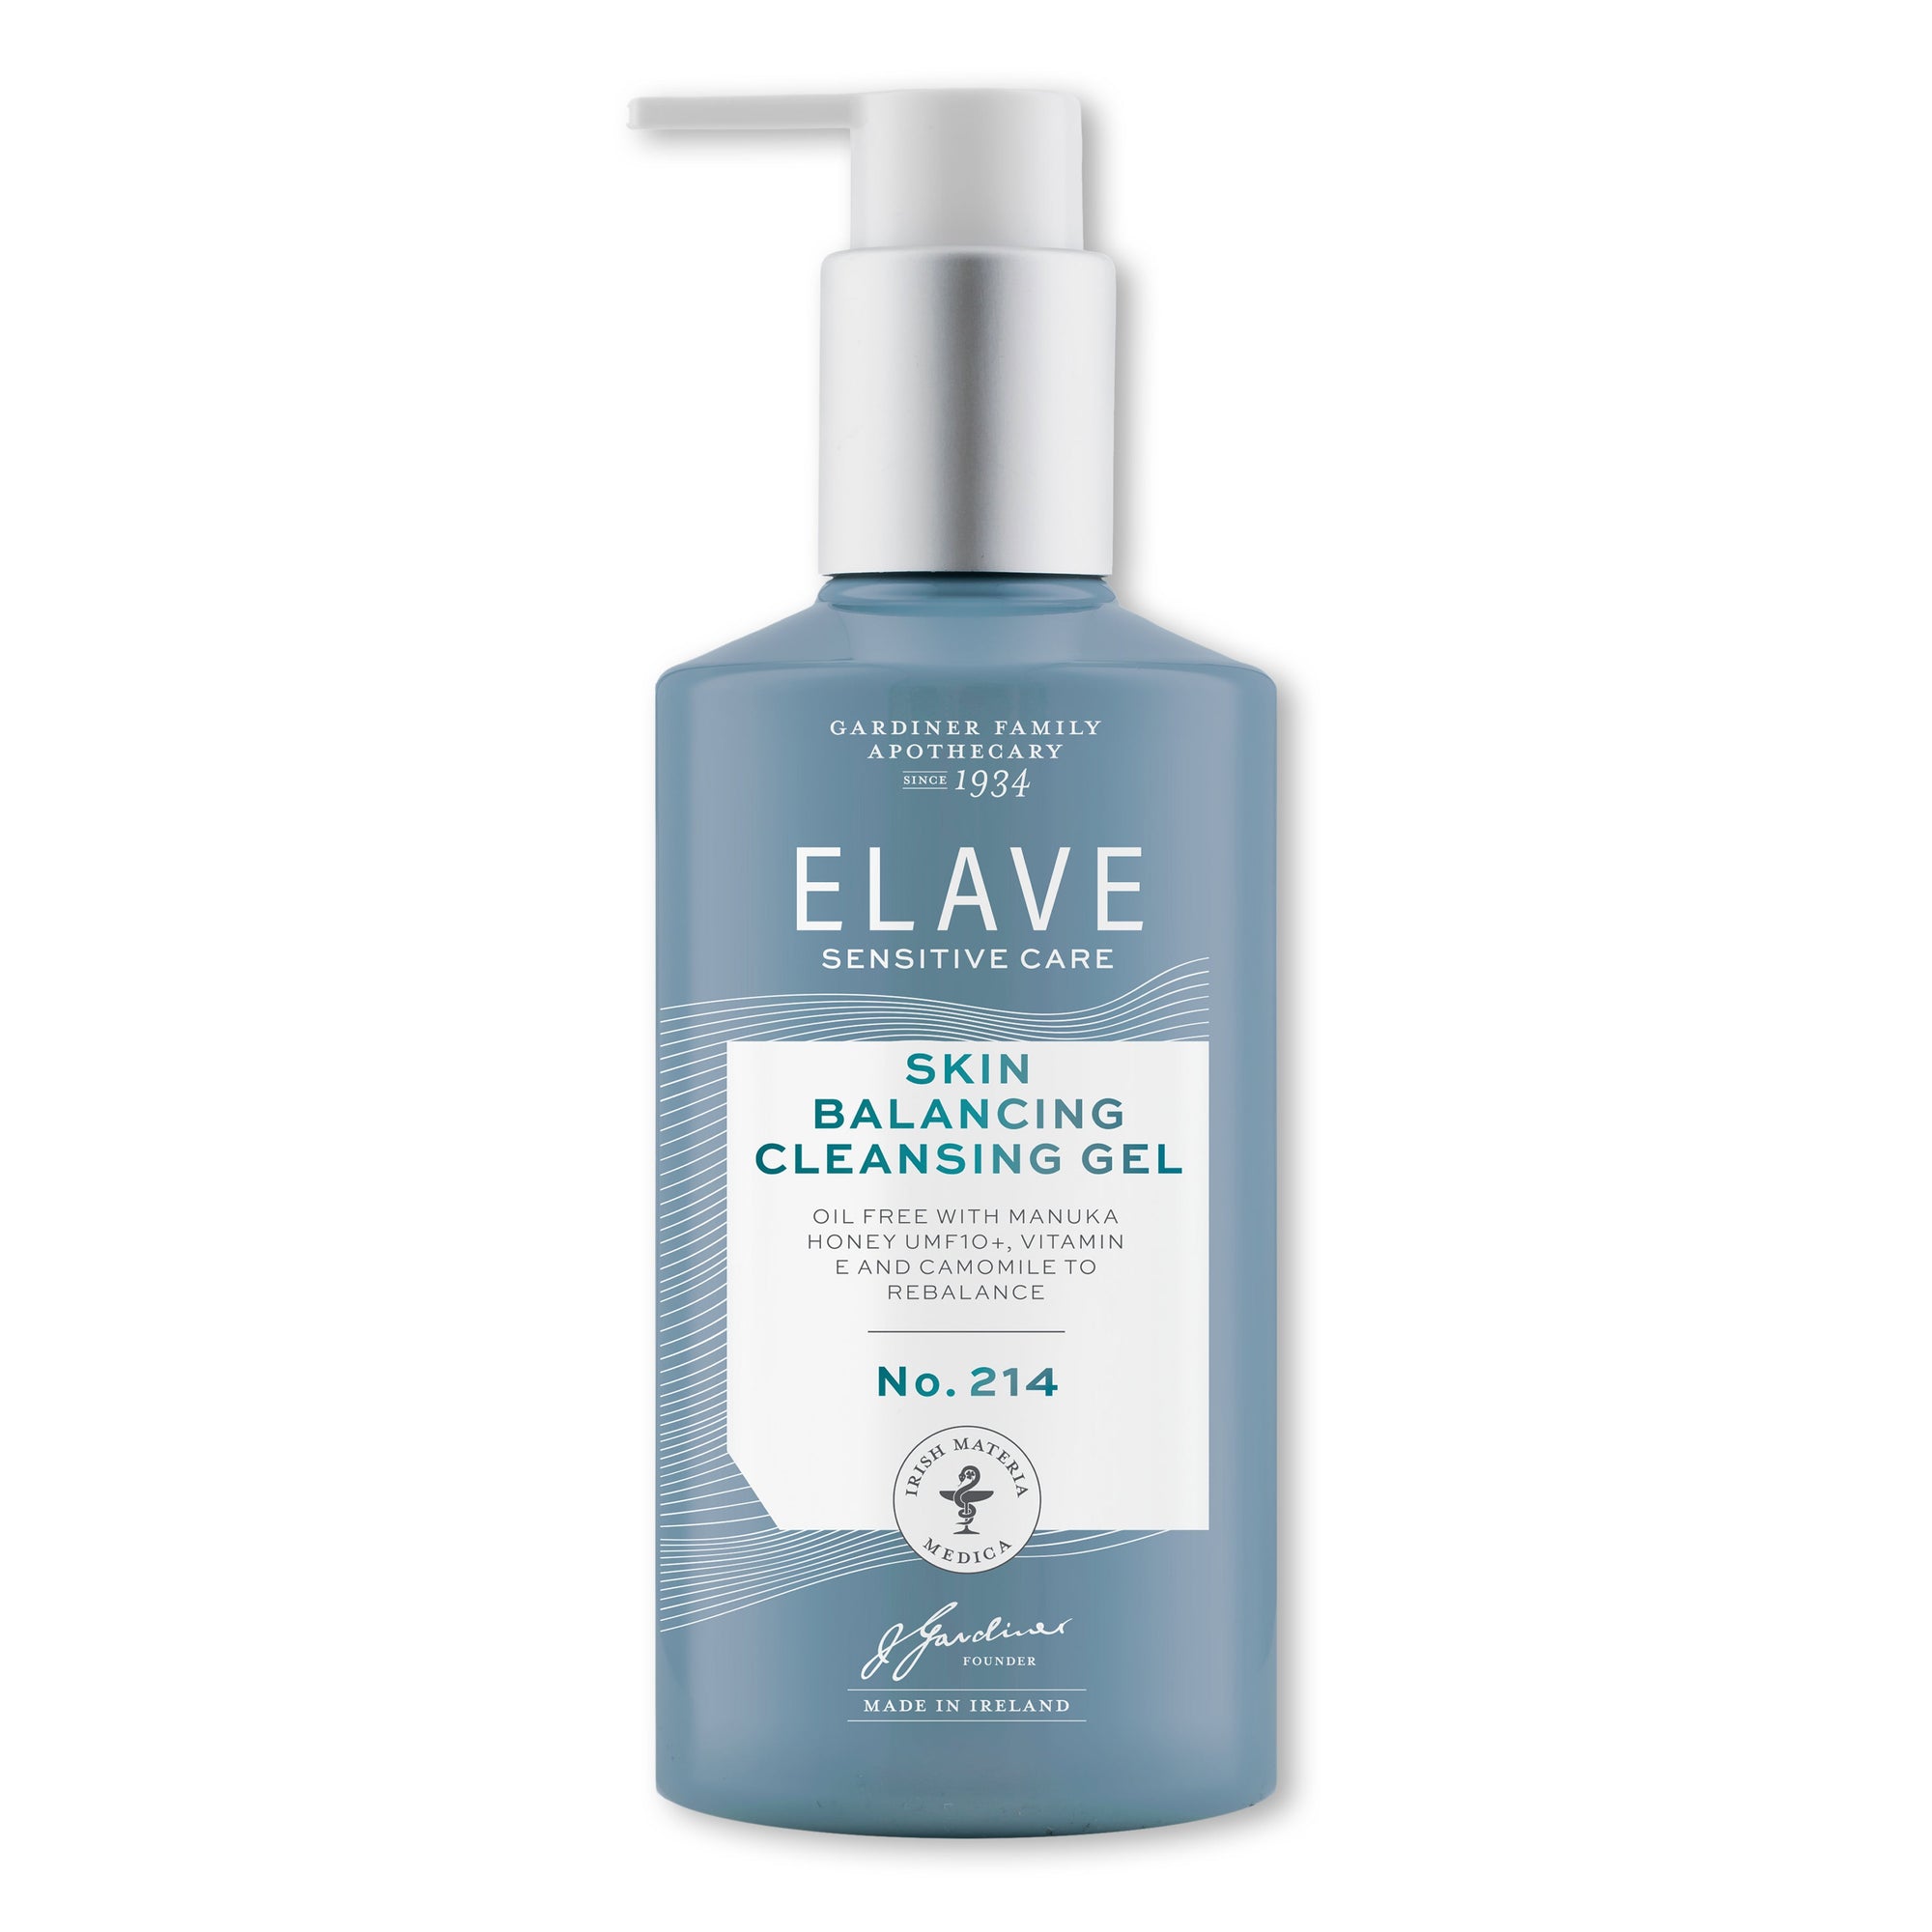 Elave 肌膚平衡潔面啫喱 200毫升 (No.214) / Elave Skin Balancing Cleansing Gel No.214 200ml